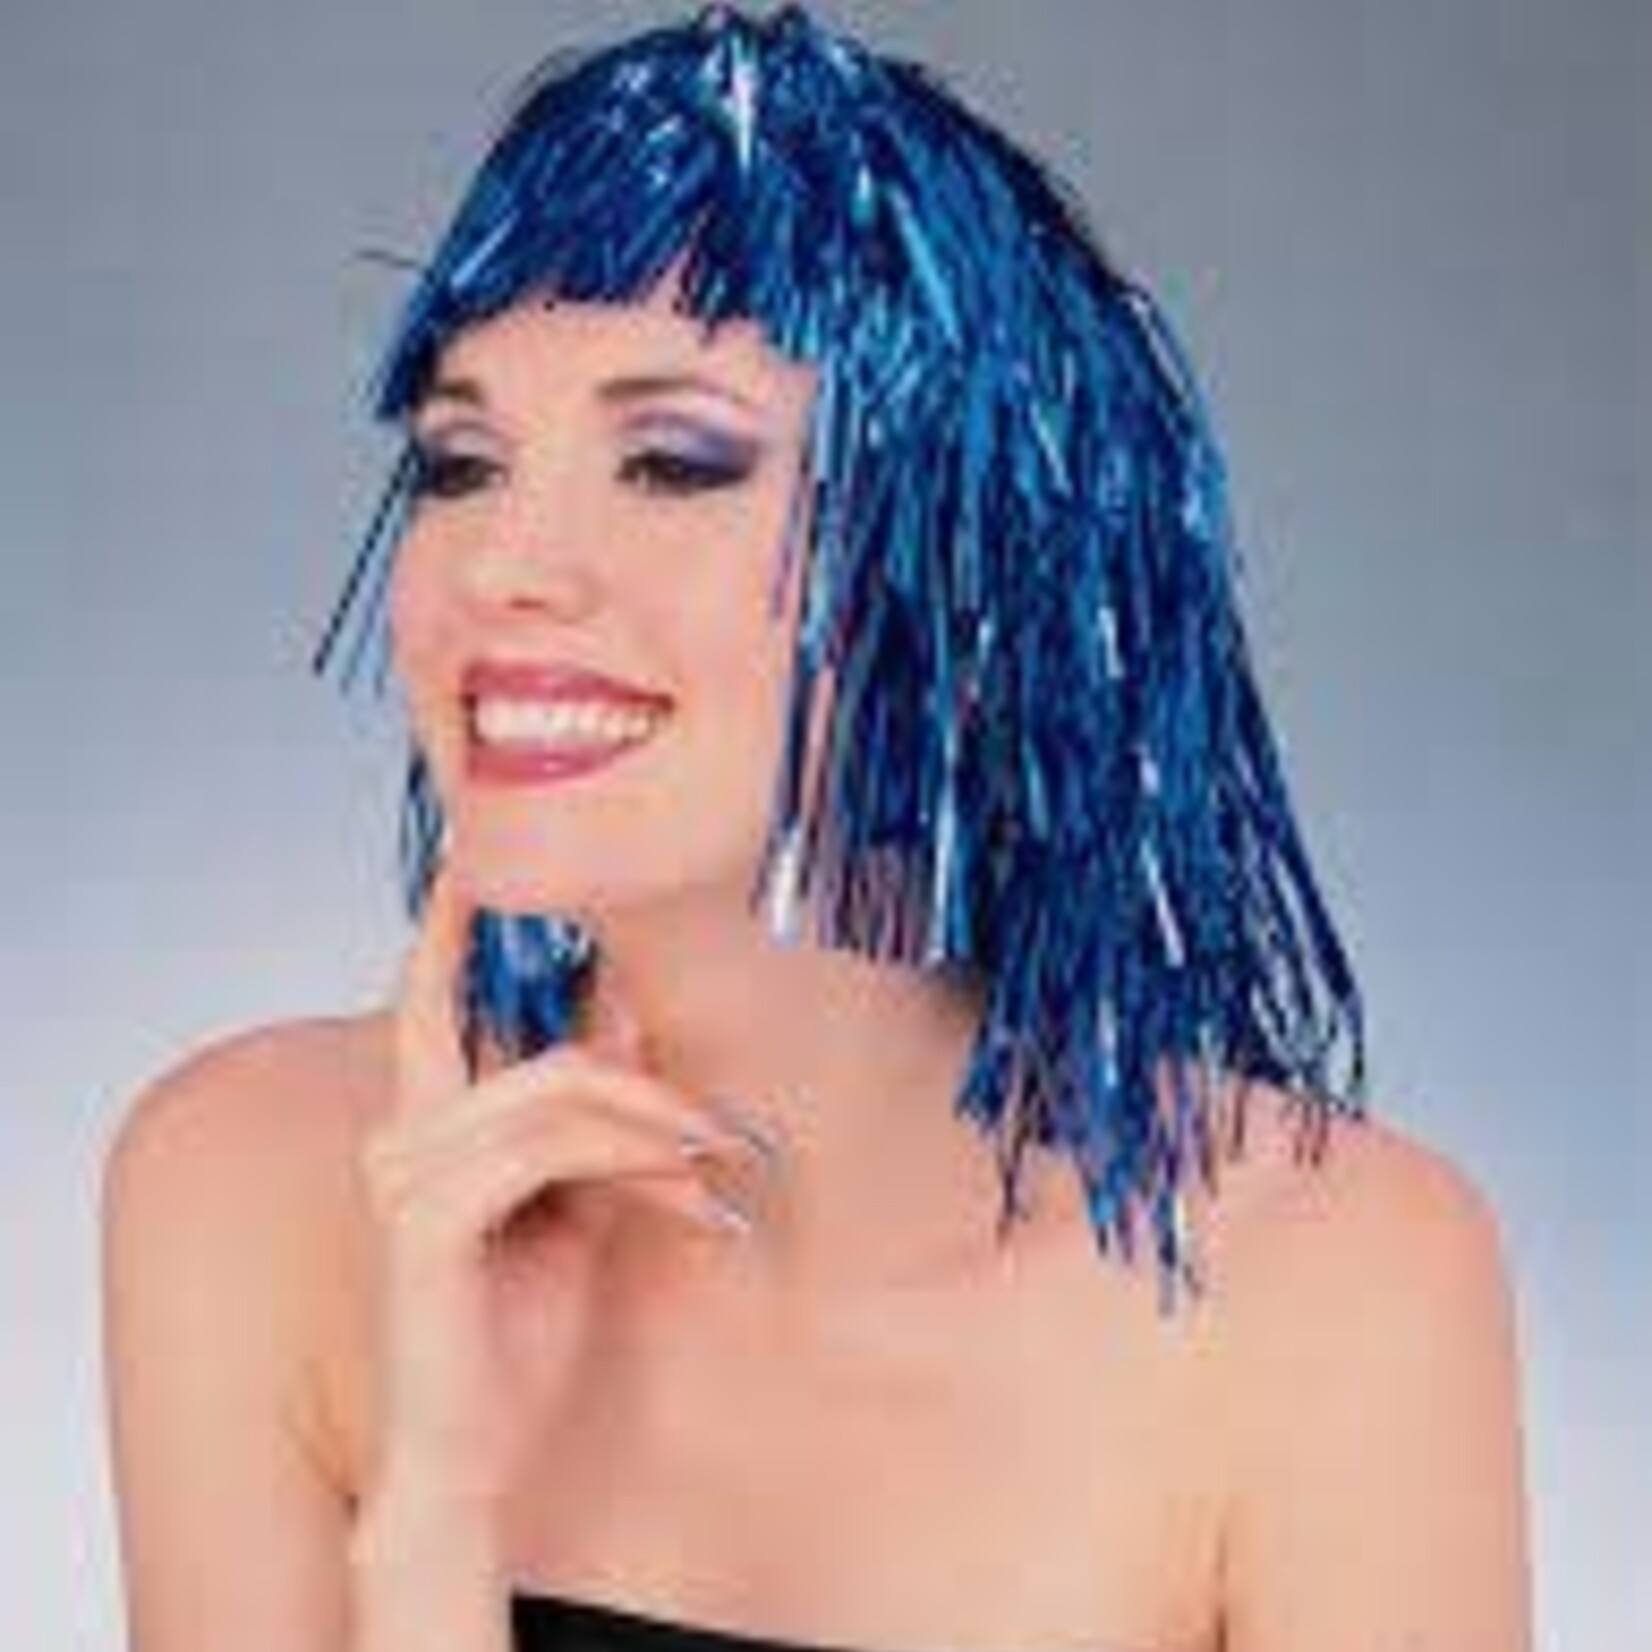 Tinsel Wig Blue